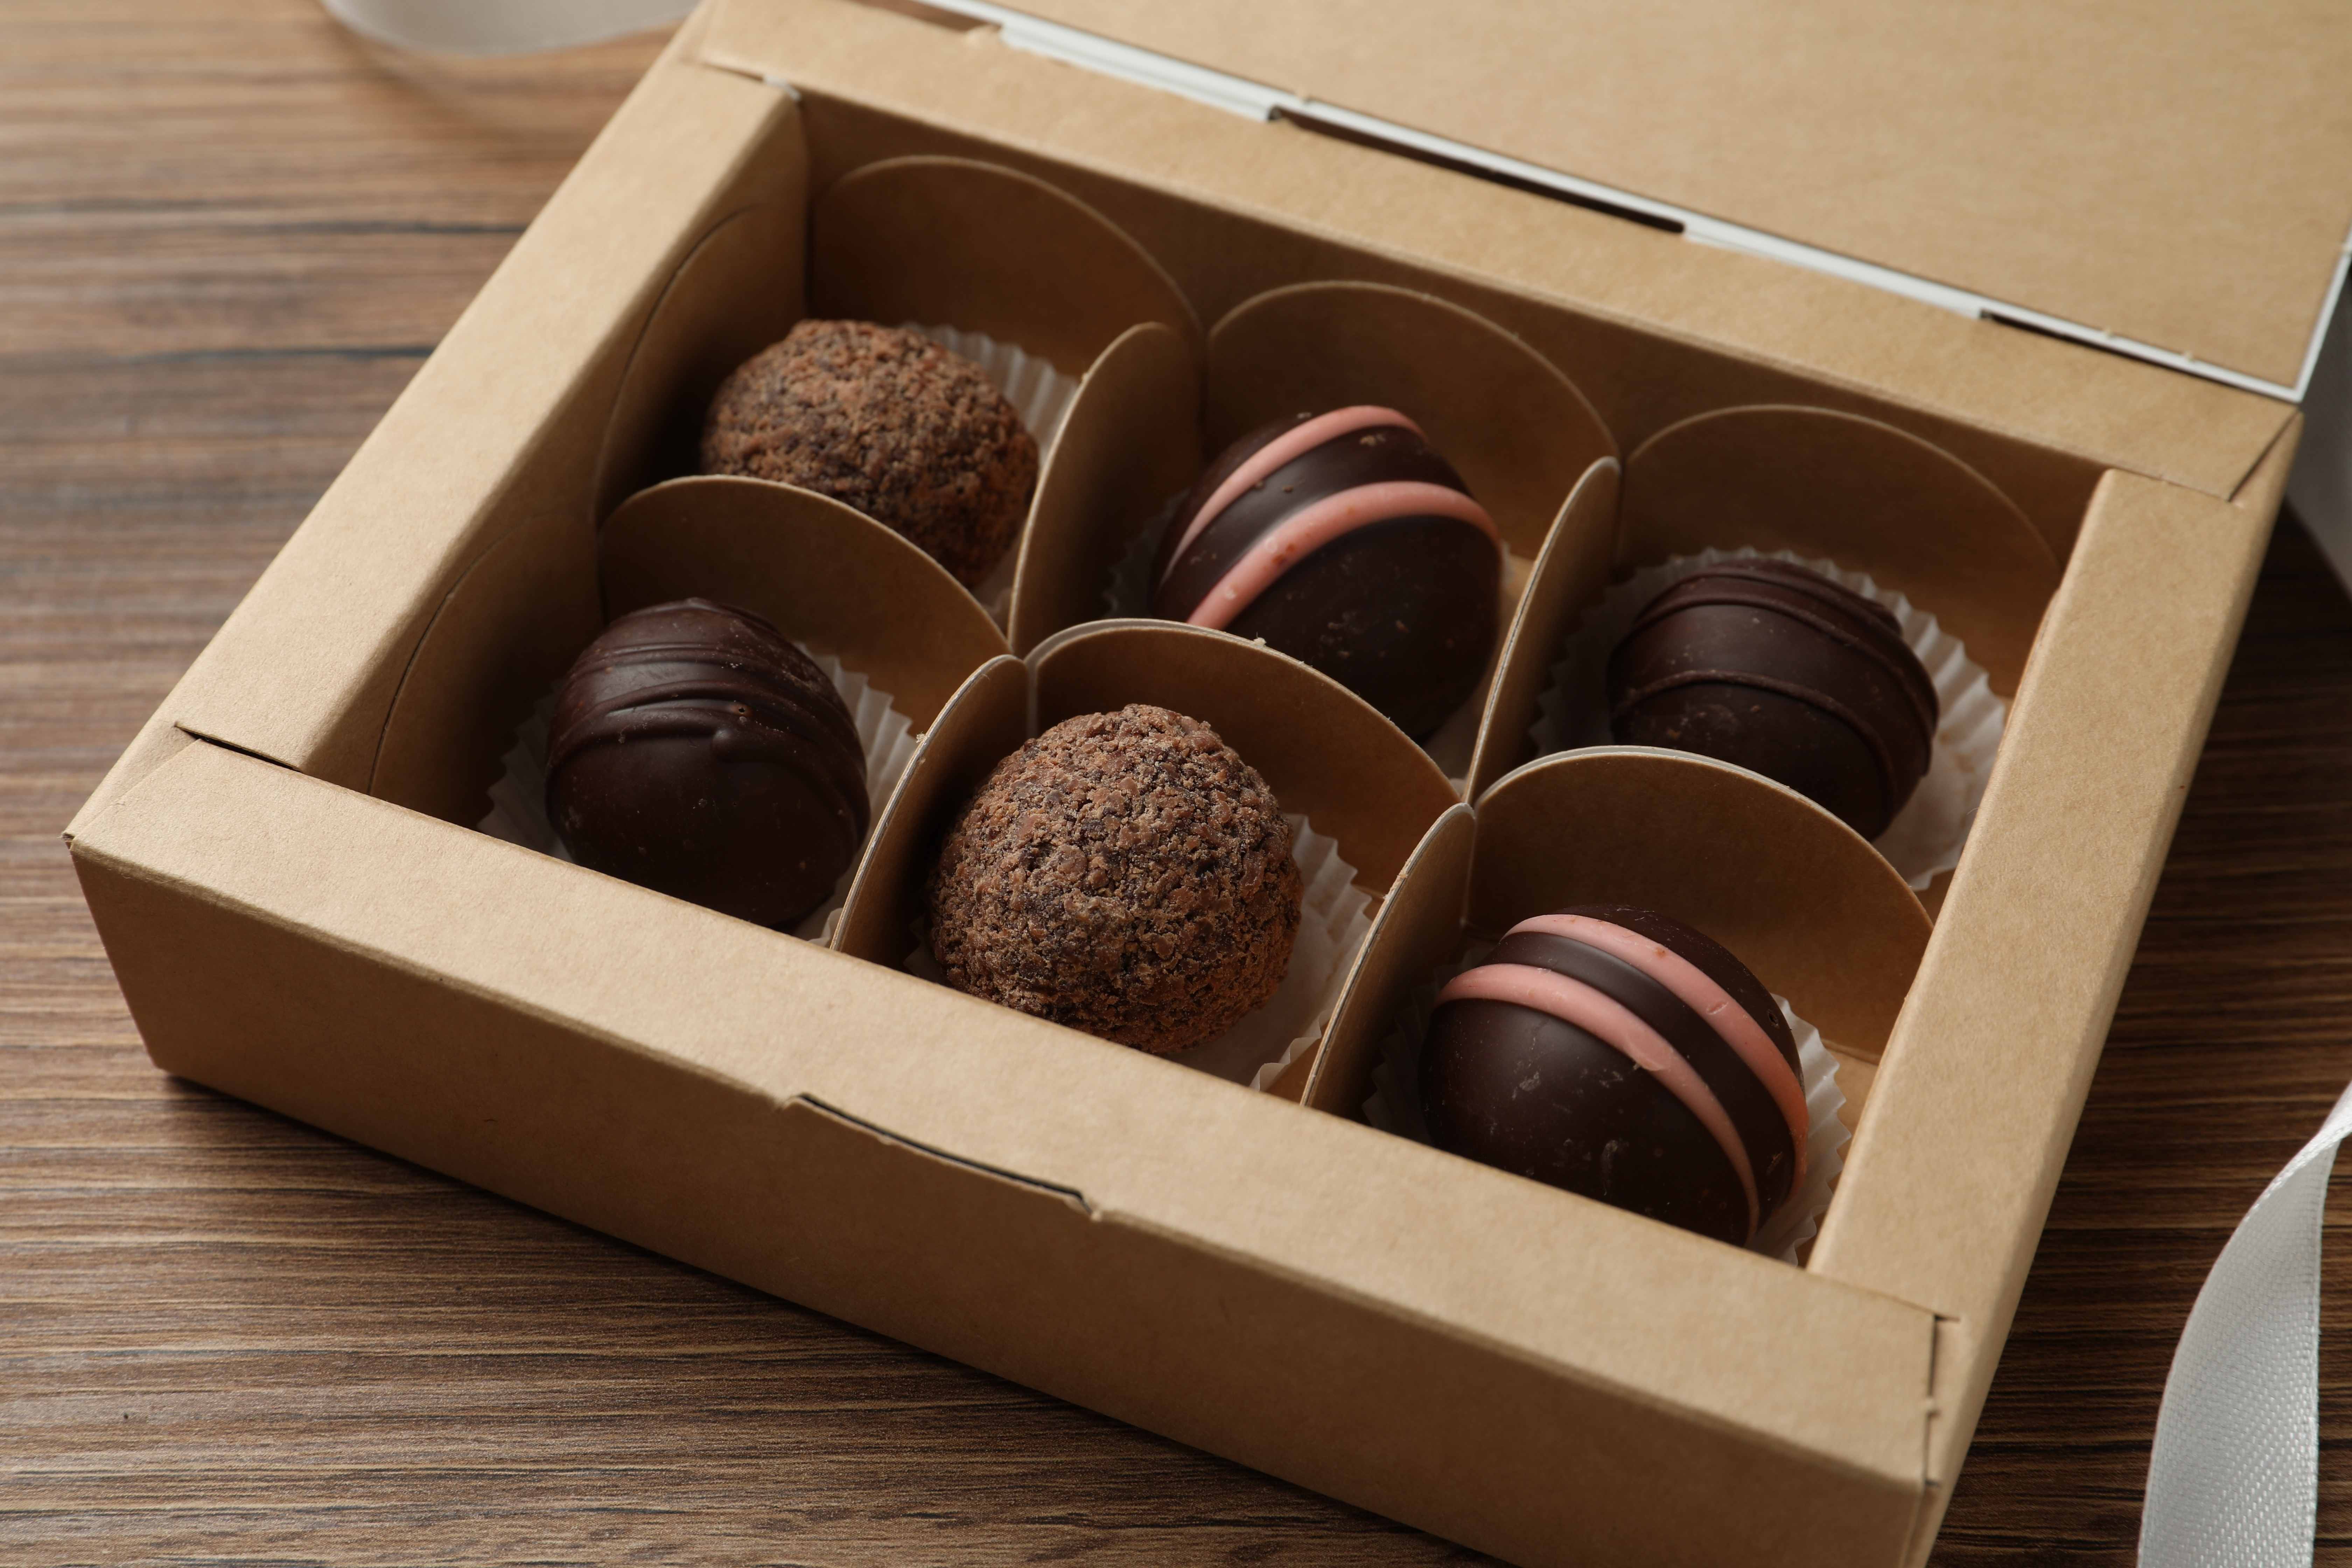 A box of delicious chocolate bon-bons makes a wonderful hostess gift.